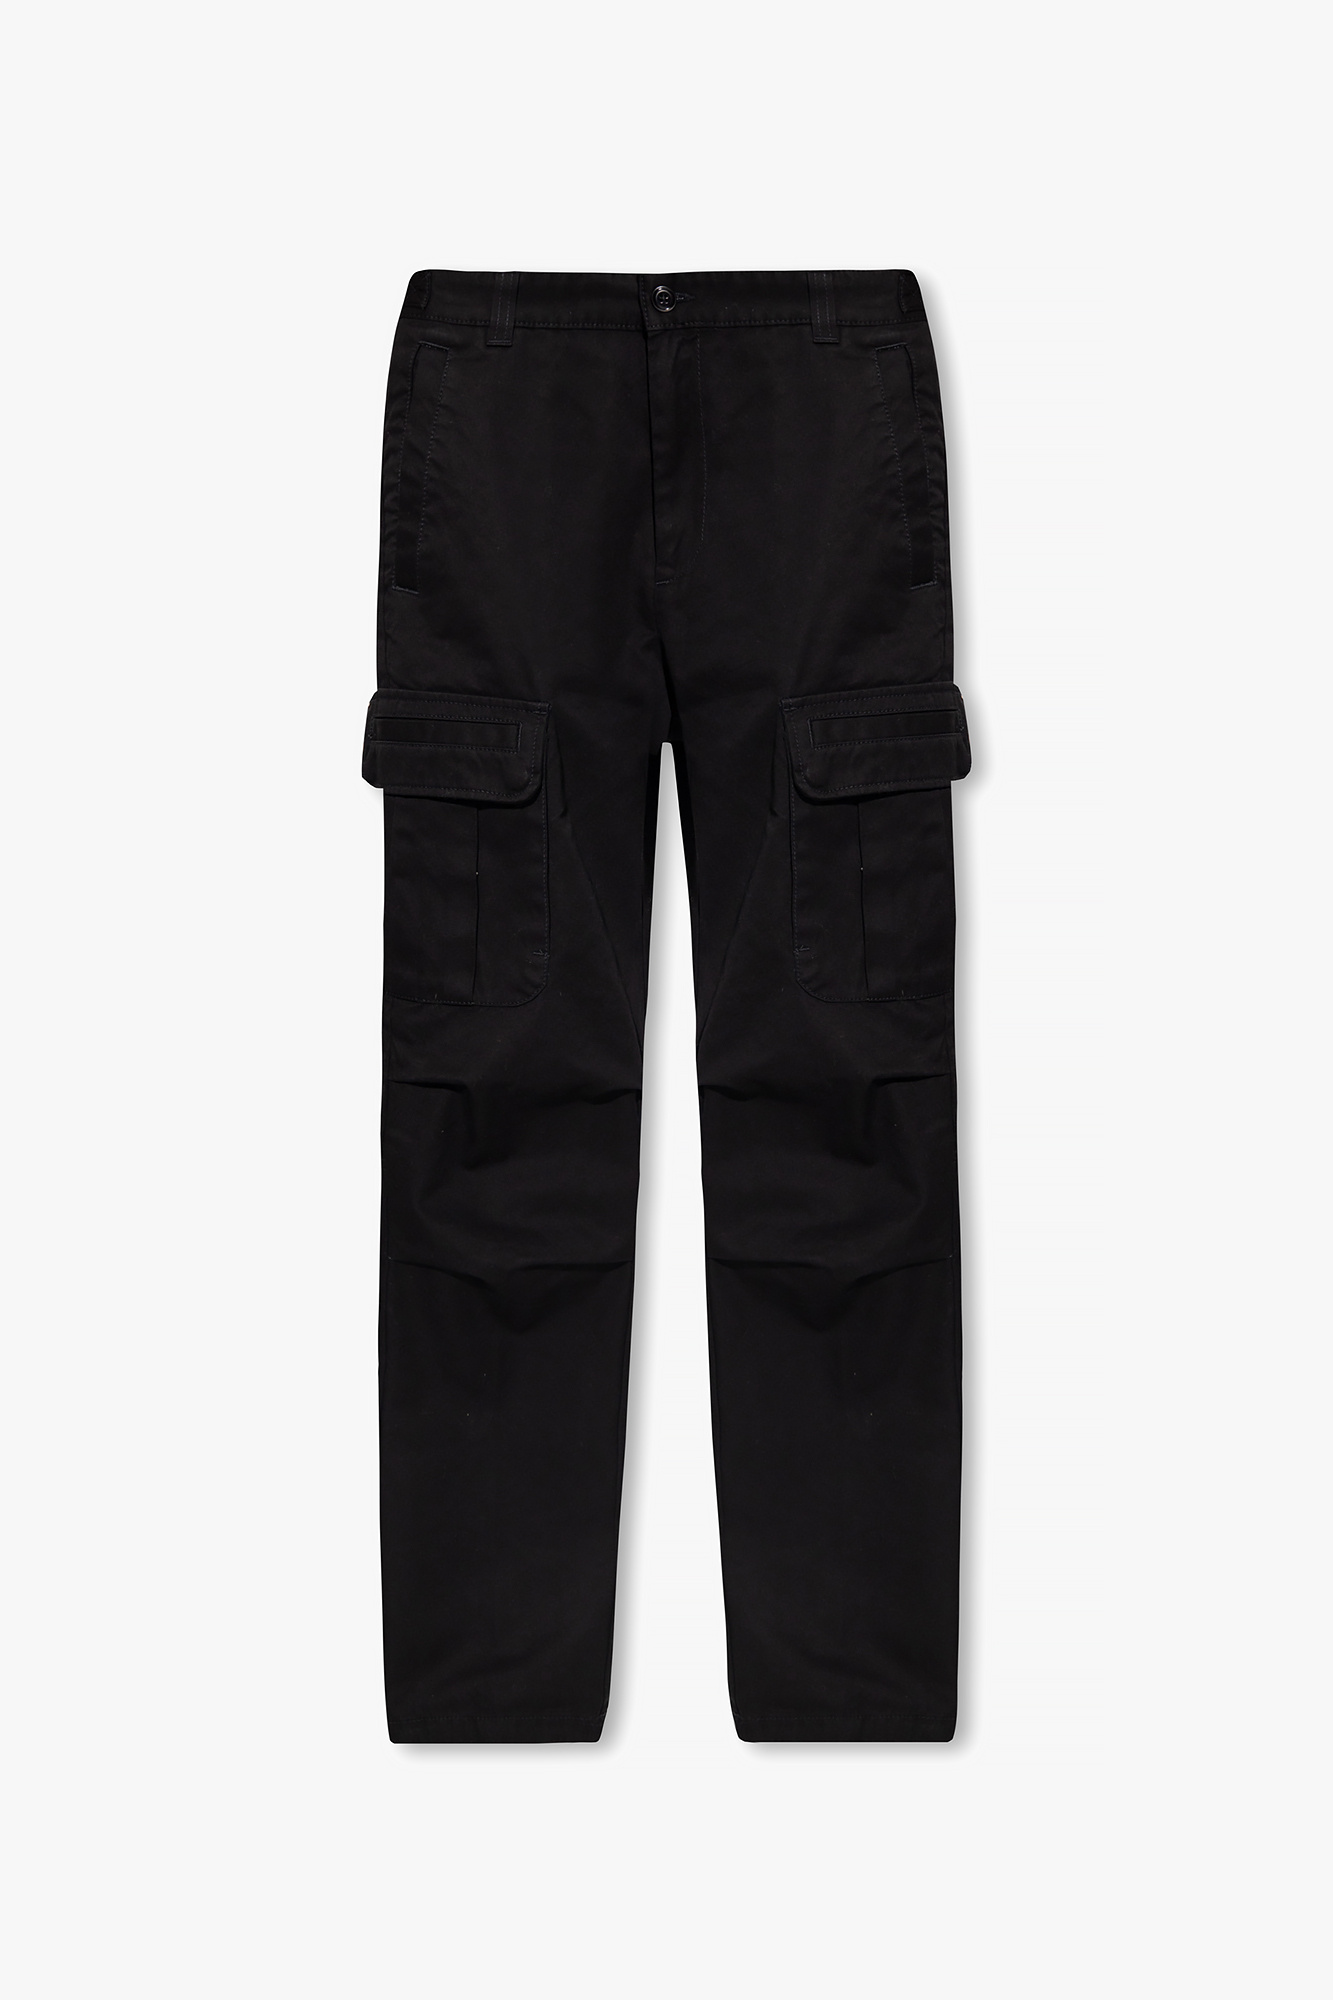 Diesel ‘P-ARGY’ cargo trousers | Men's Clothing | Vitkac